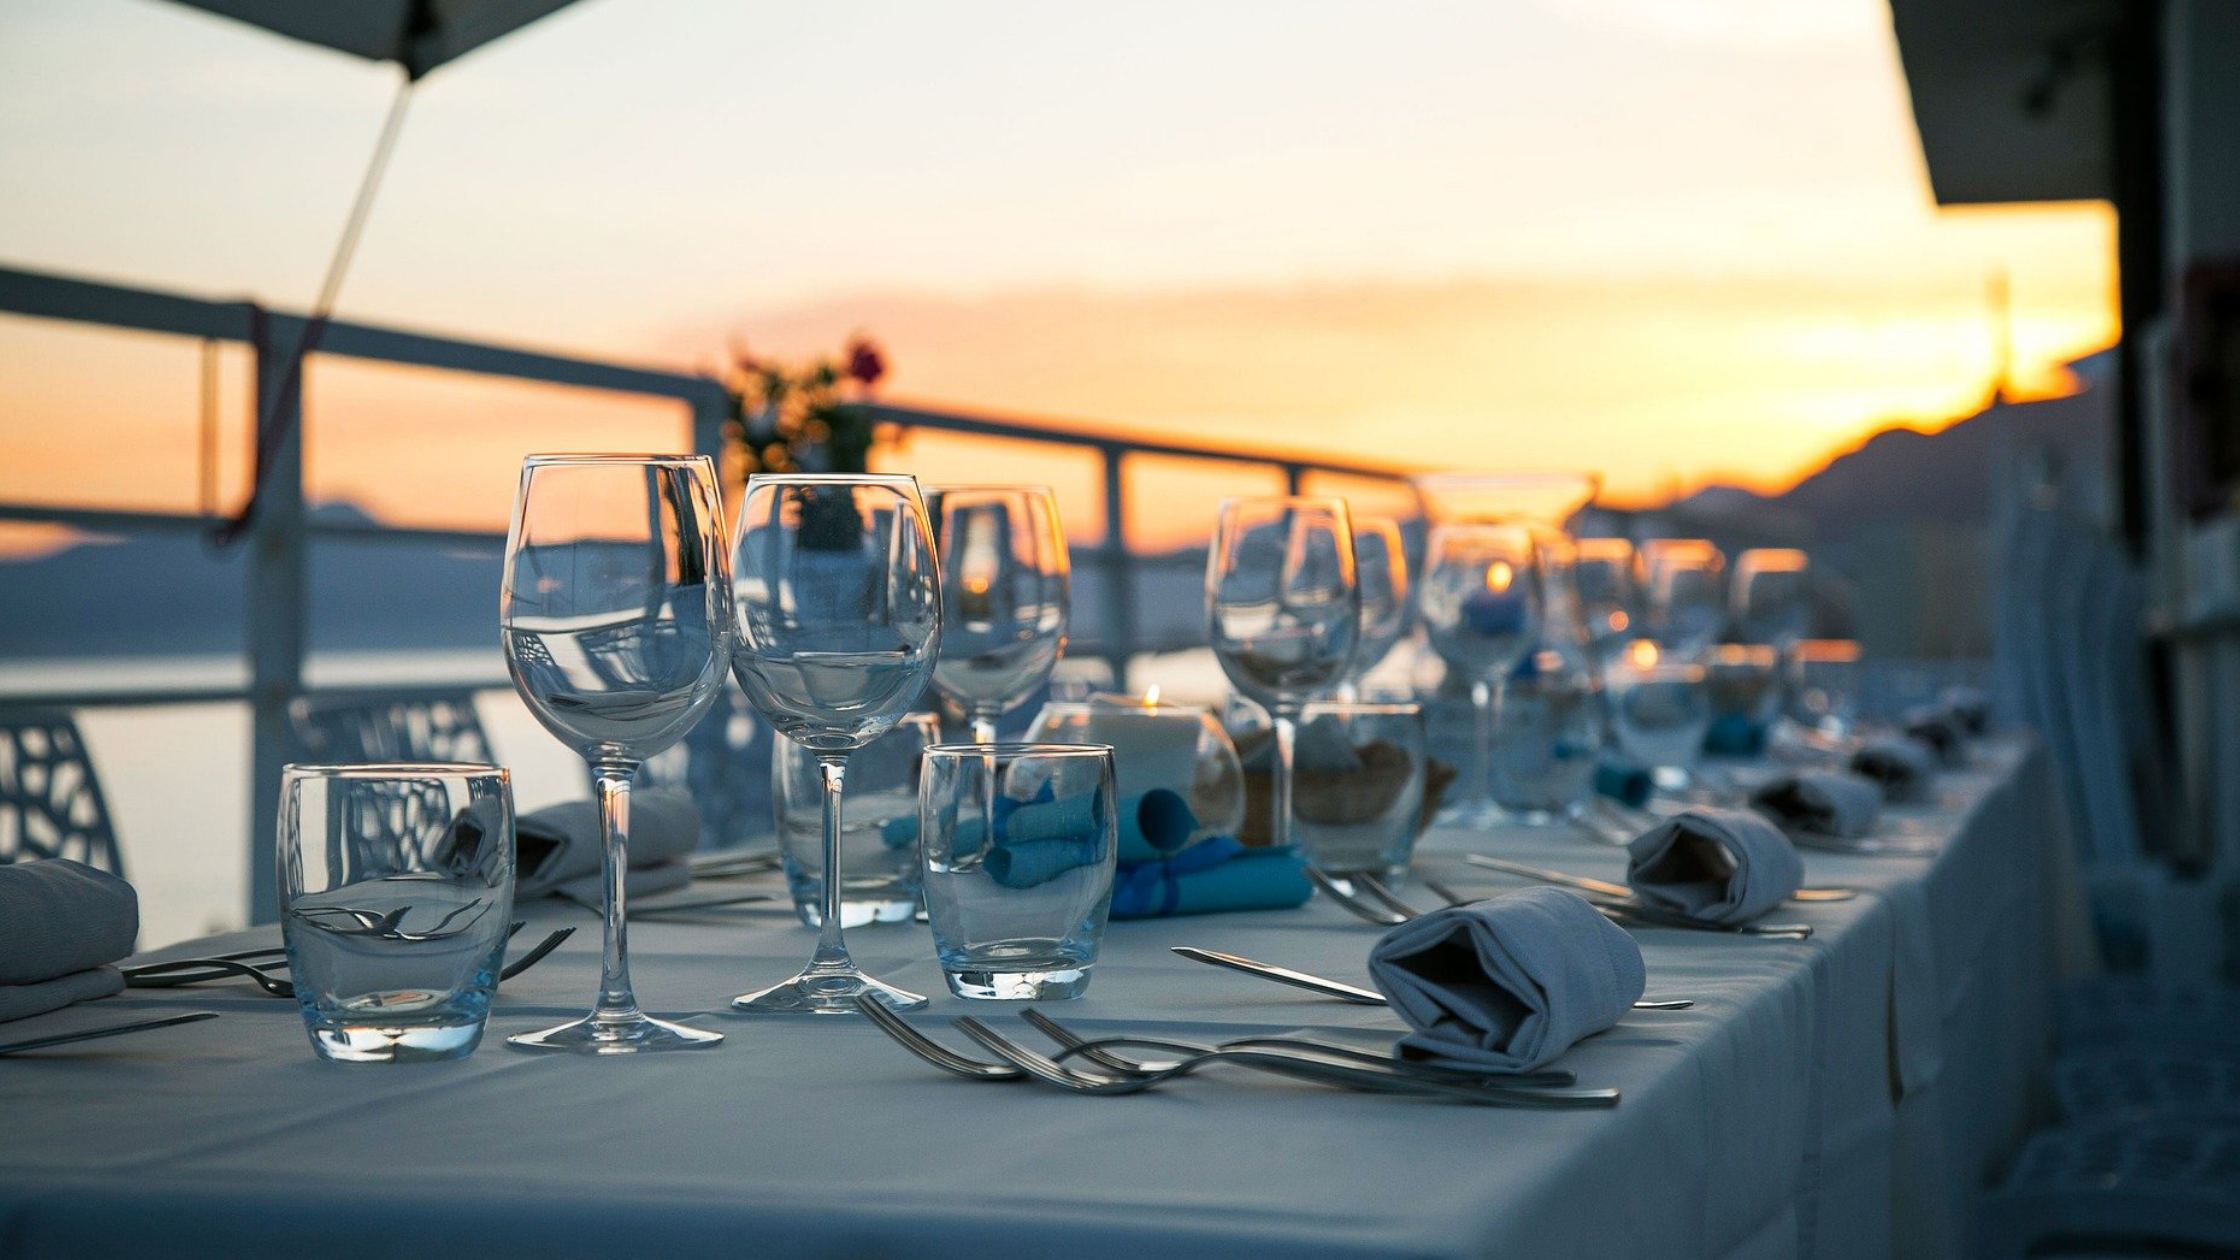 Restaurant glassware with sunset background.